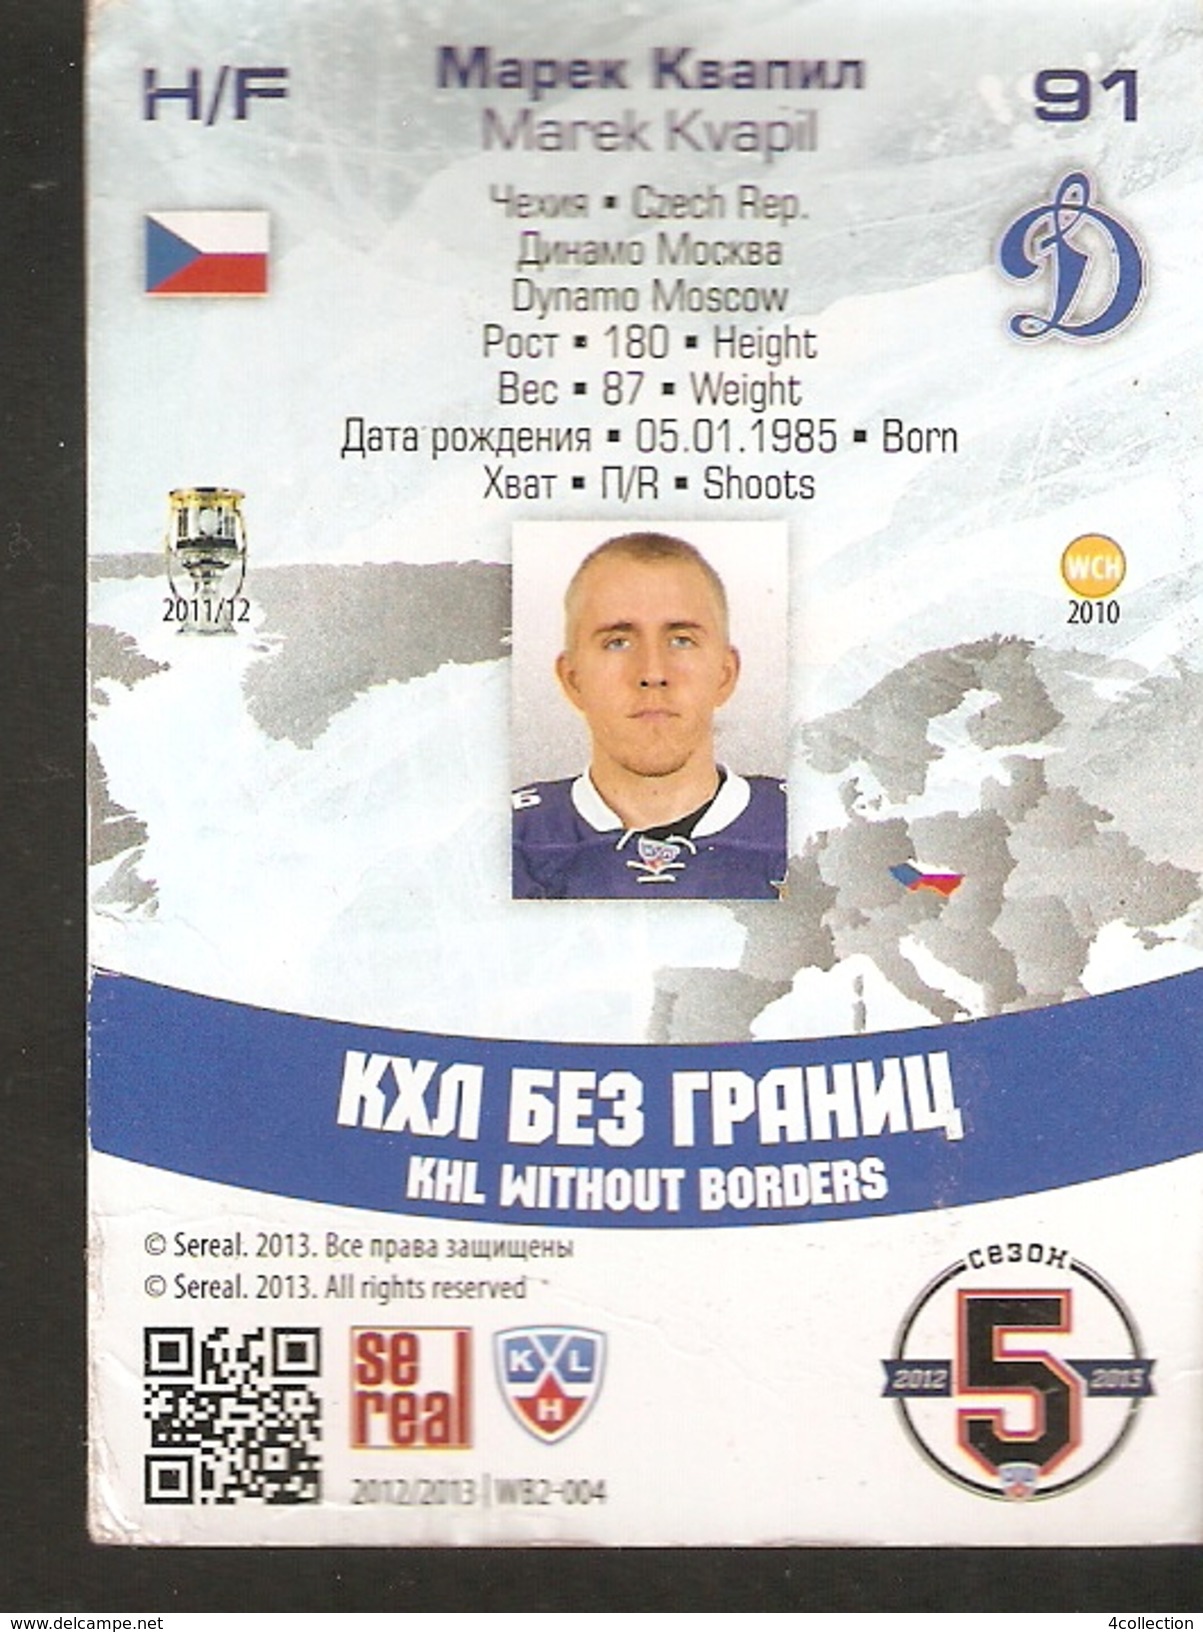 Hockey Sport Collectibles KHL Se Real Card MAREK KVAPIL H/F #91 CZECH Rep. DYNAMO Moscow 5th Season 2012-2013 - 2000-Nu